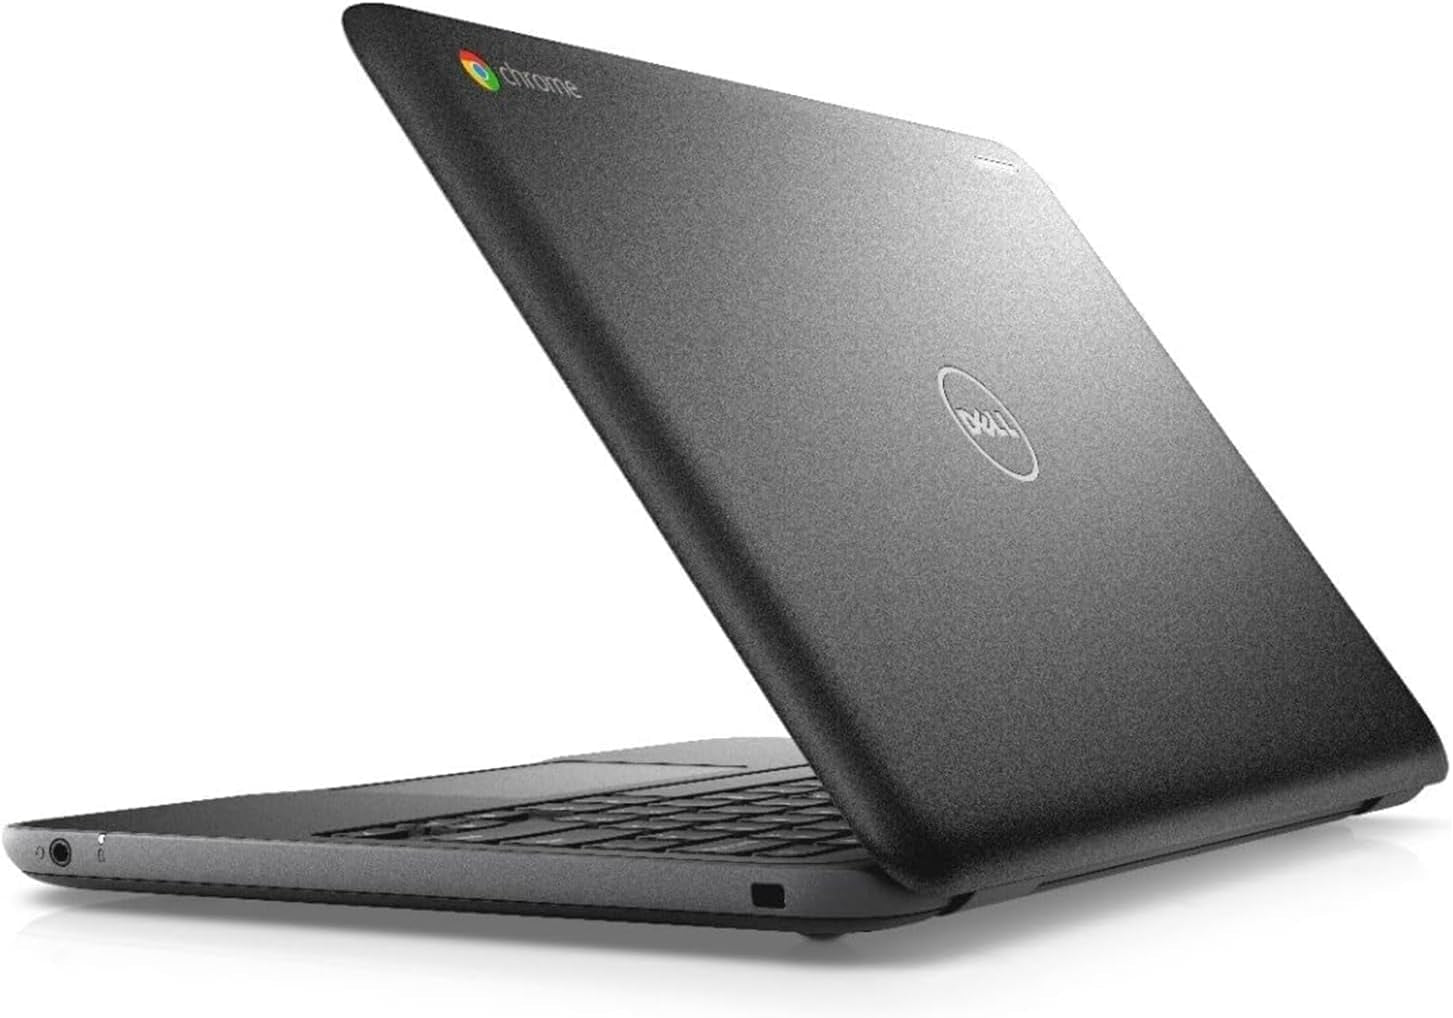 Dell Chromebook 11.6" - 3180 Laptop Computer - Intel Celeron N3060, 4GB RAM, 16GB SSD, Web Camera, Wi-Fi, Bluetooth, HDMI, Chrome OS (Renewed)